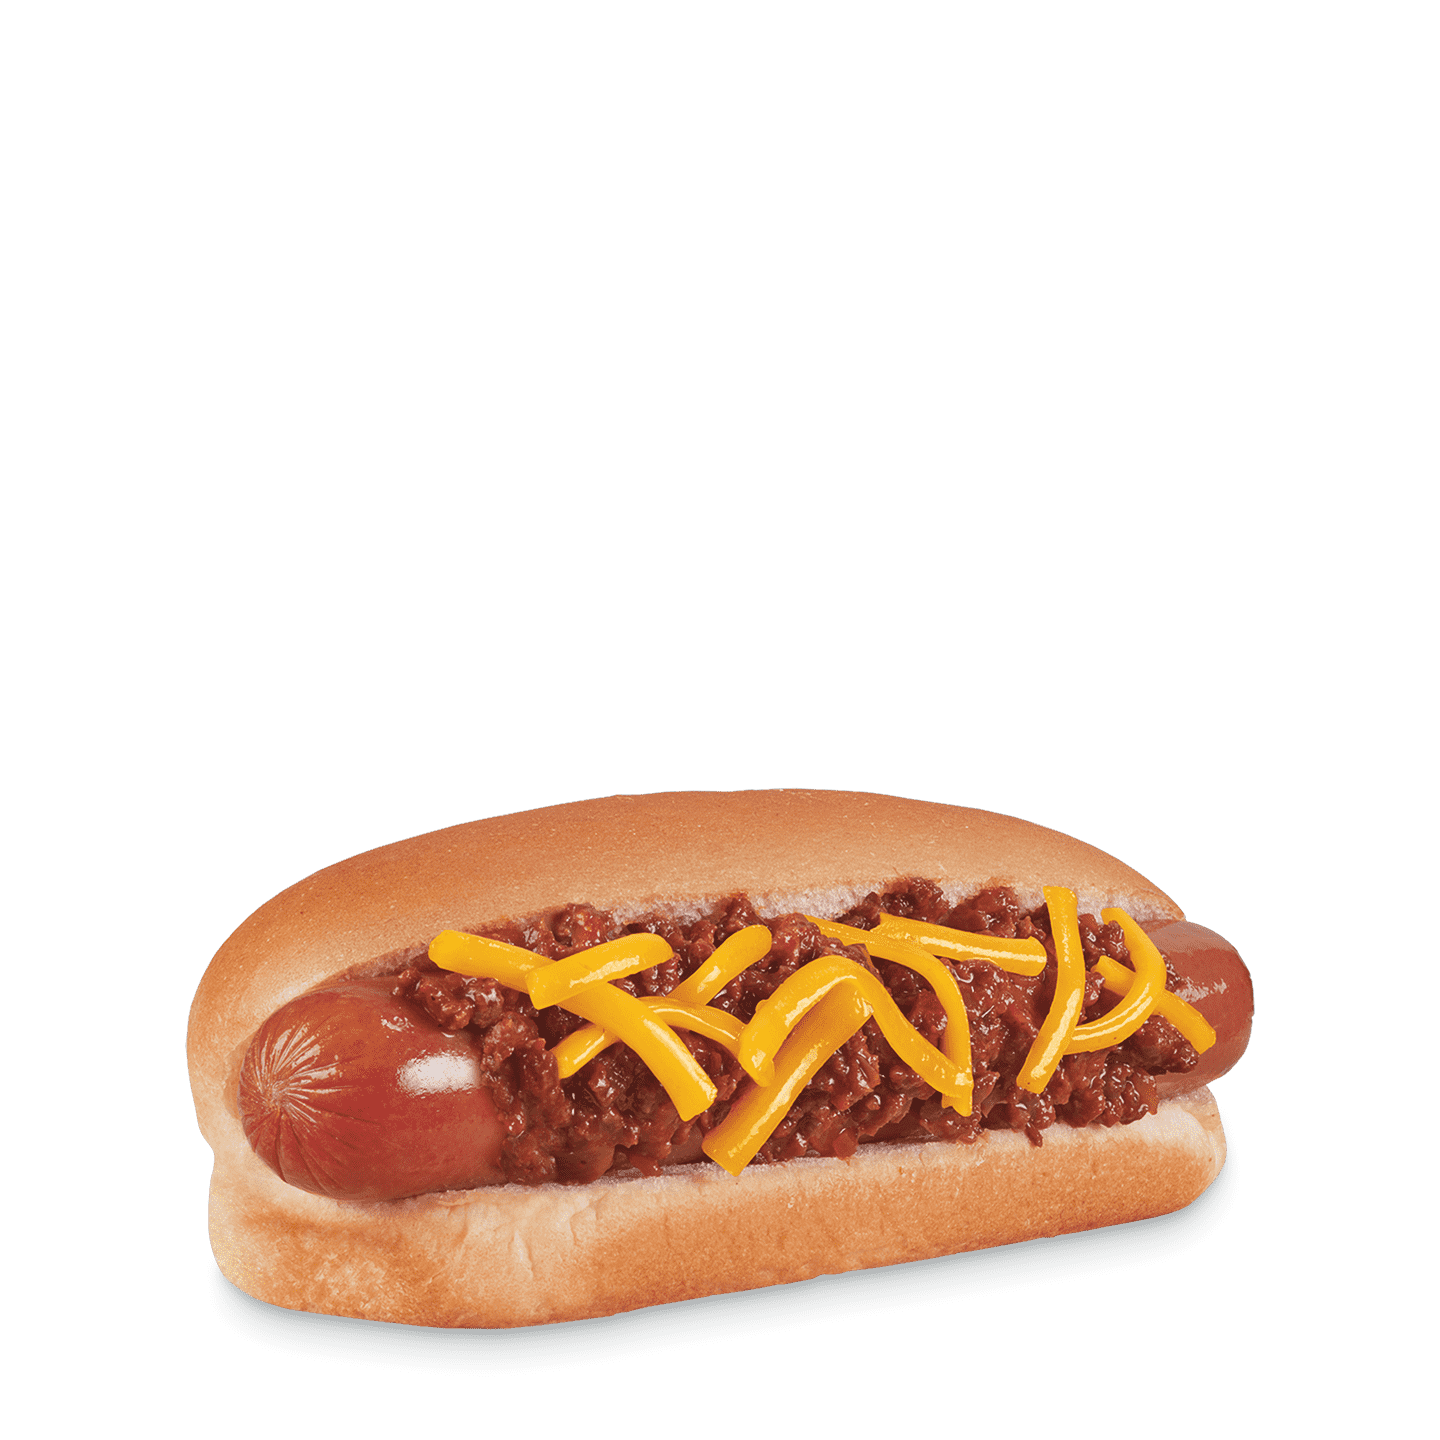 Chili Cheese Dog in bun